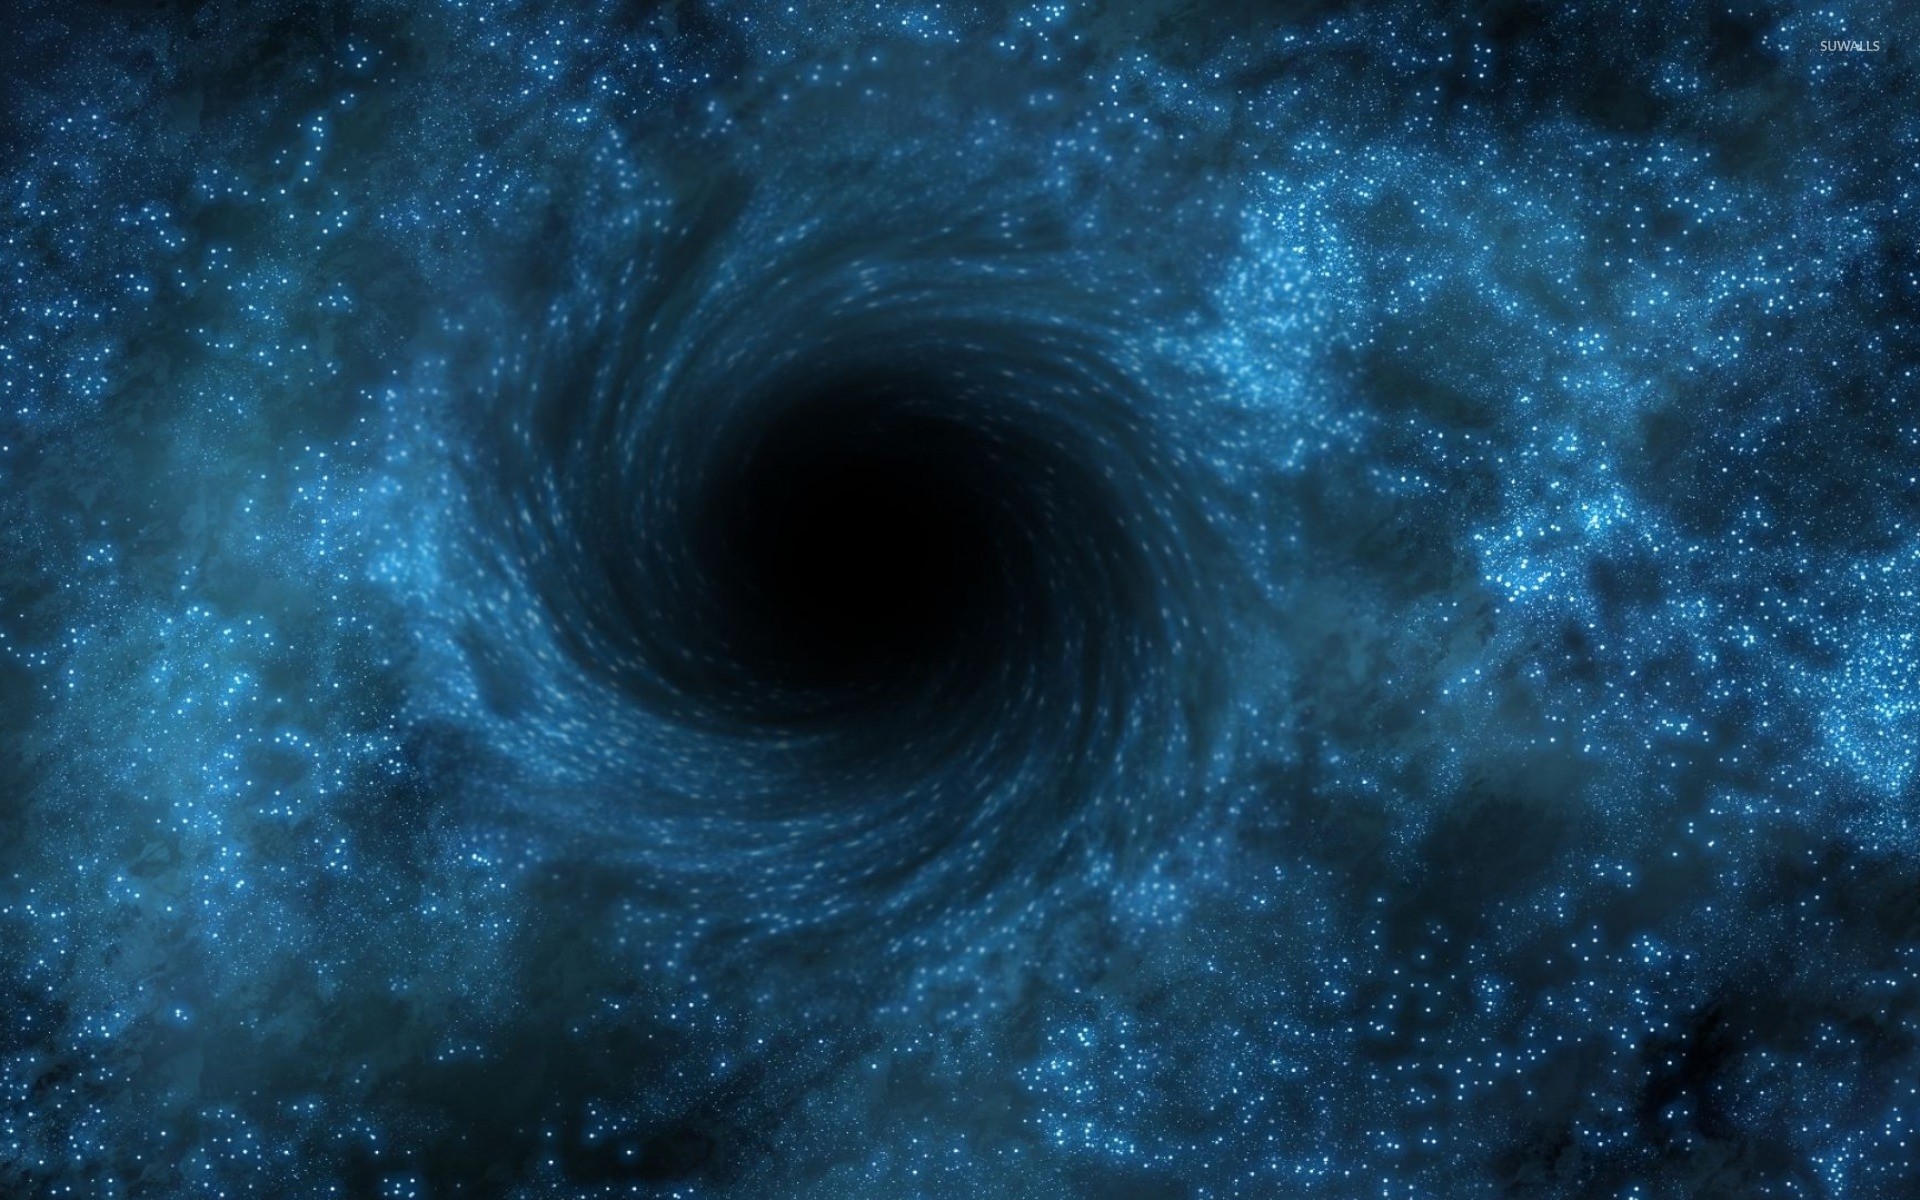 Interstellar Black Hole Wallpaper (73+ images)